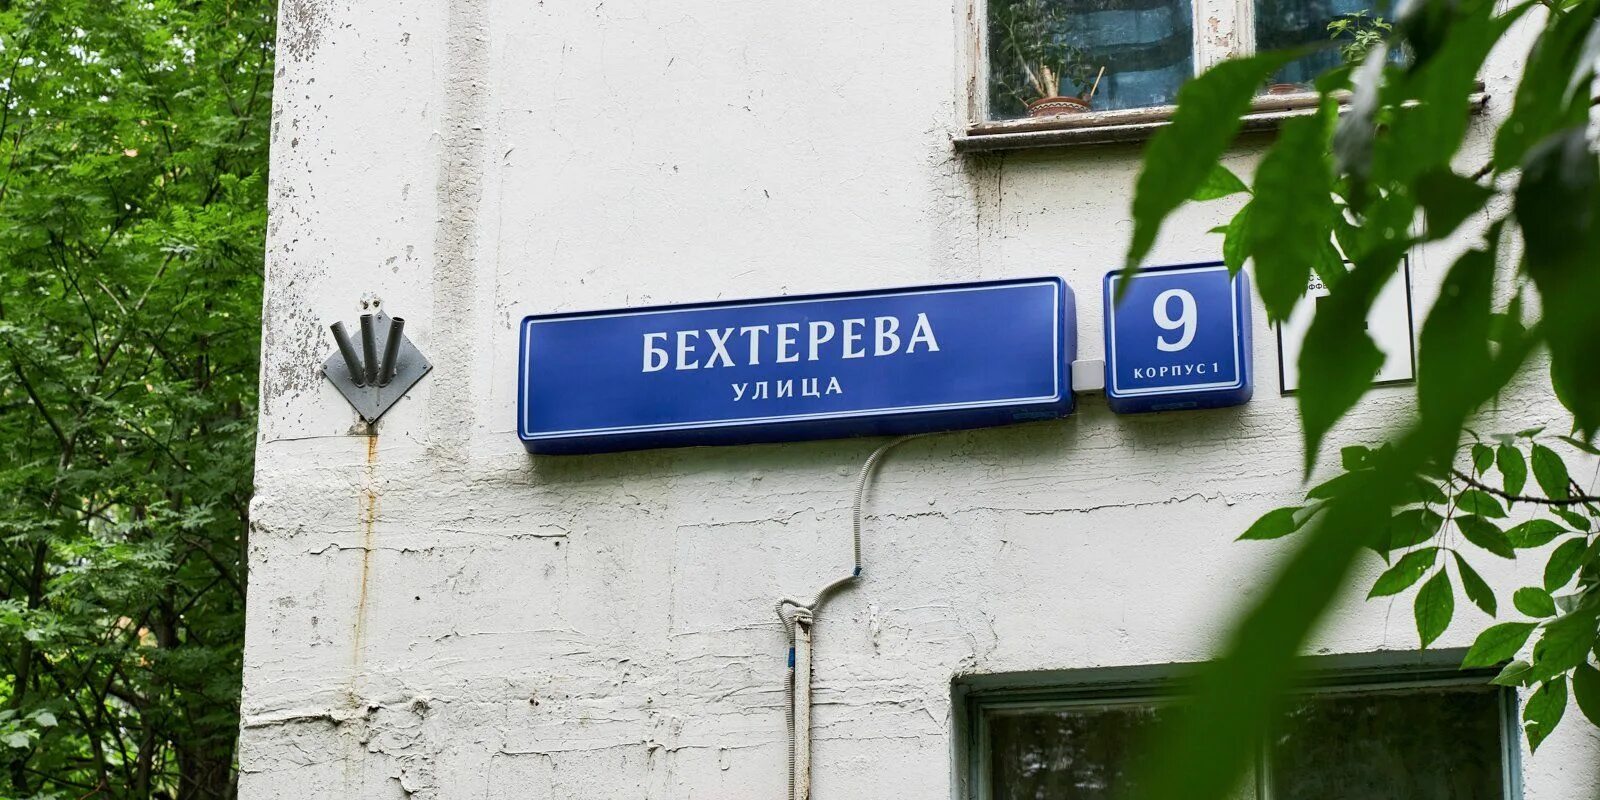 Улица не знаю дом 1. Улица Бехтерева (Москва). Улица Бехтерева в честь. Улица Бехтерева парк. Улица Бехтерева 33.